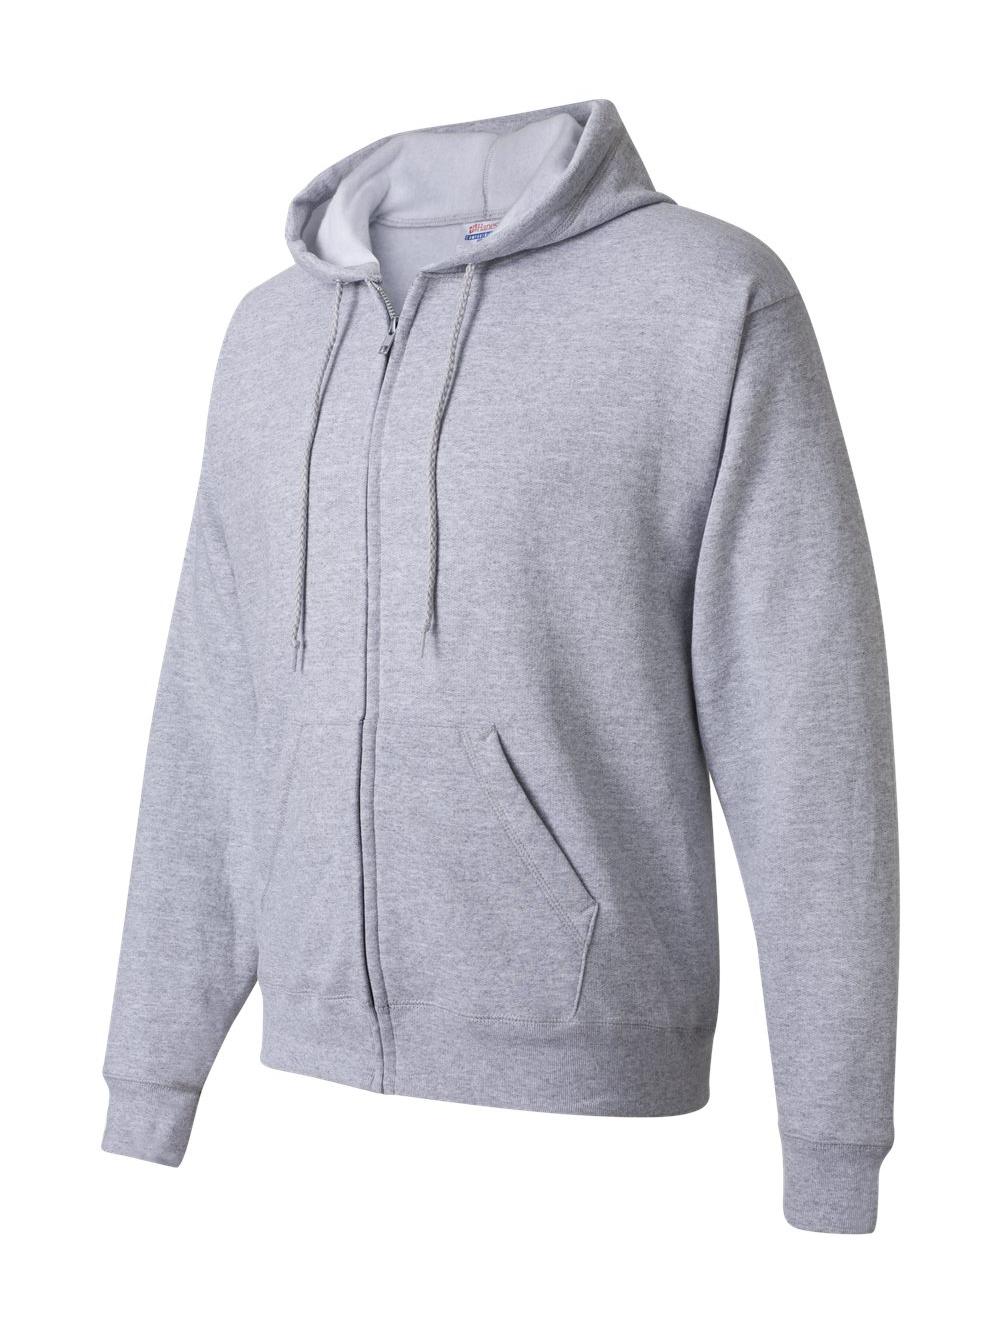 Hanes - Ecosmart Full-Zip Hooded Sweatshirt - P180 - Light Steel - Size: 2XL - image 1 of 4